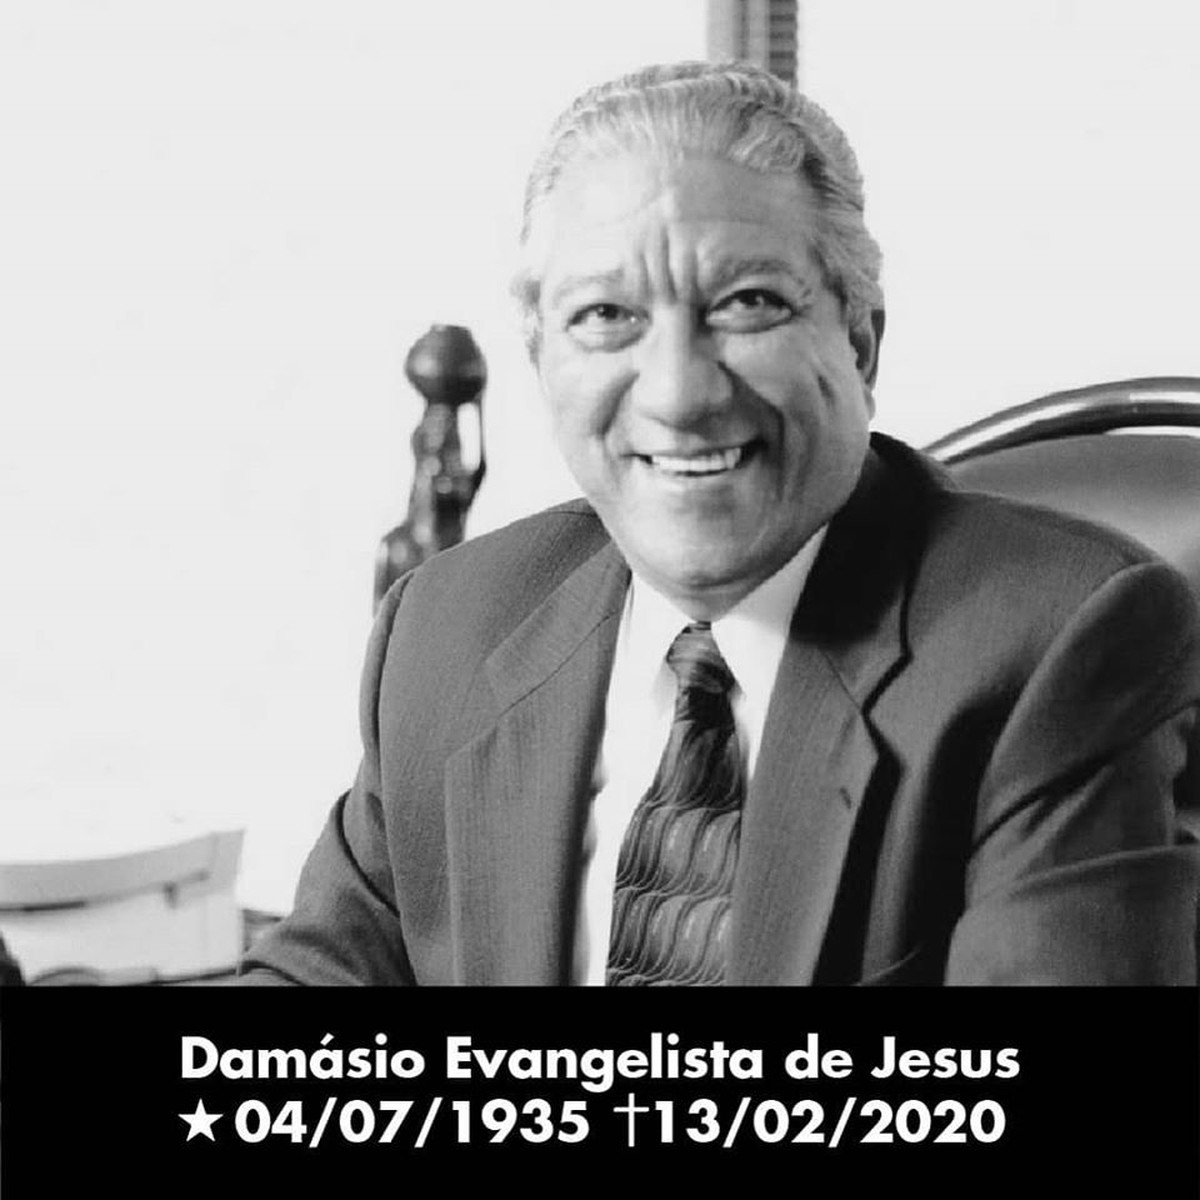 Morre professor Damásio de Jesus, fundador de cursos preparatórios para  carreiras jurídicas - 13/02/2020 - Cotidiano - Folha